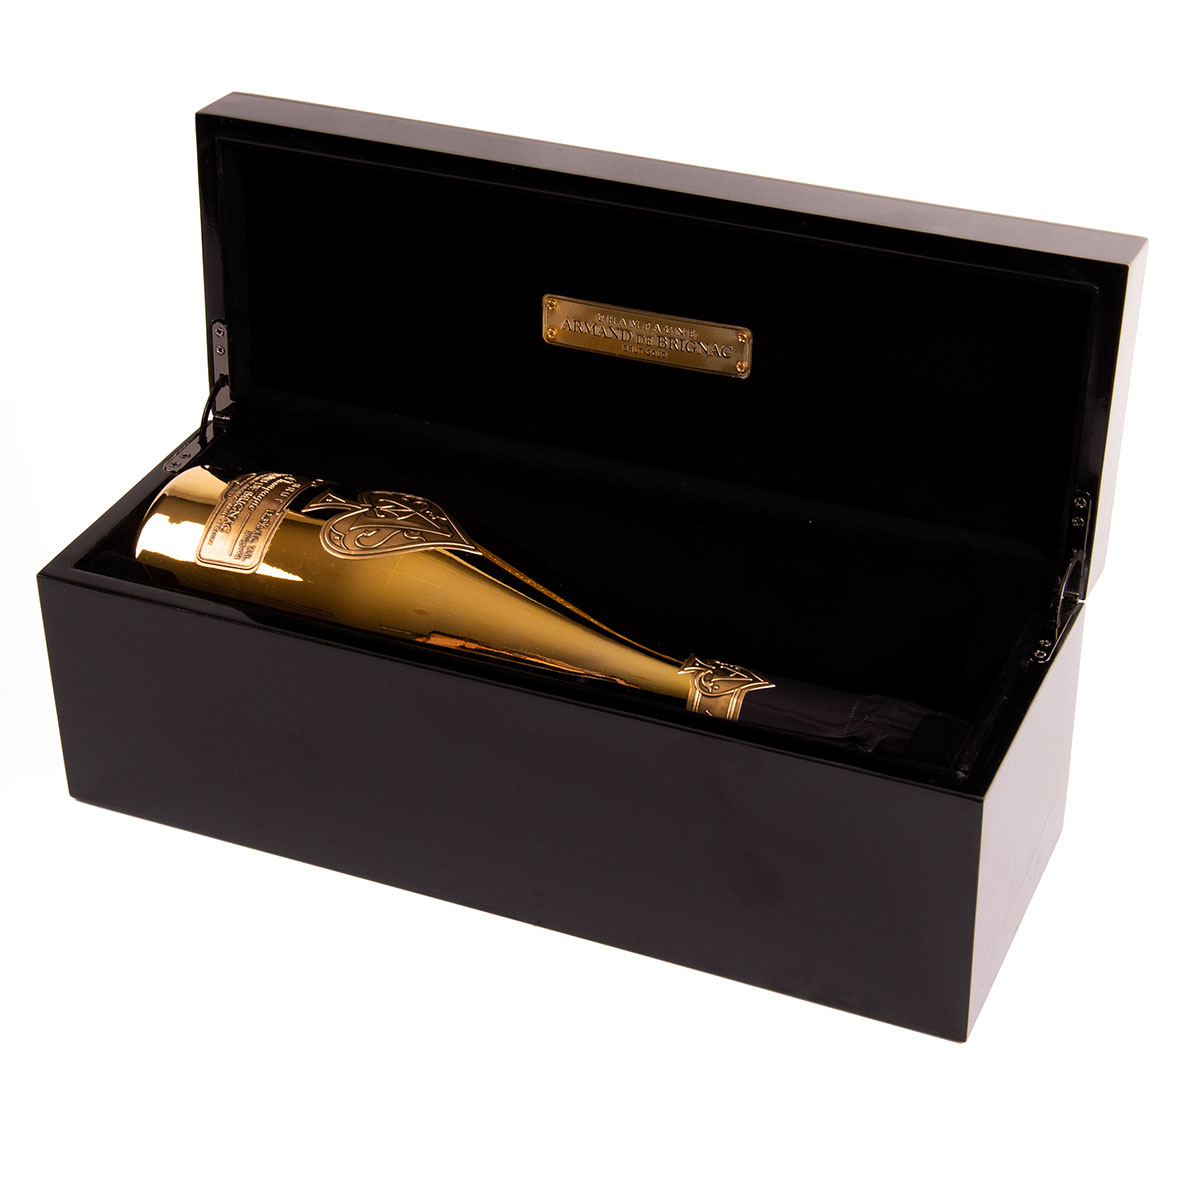 Armand de Brignac - Ace of Spades Brut Gold Champagne (Wooden Box) NV (6L)